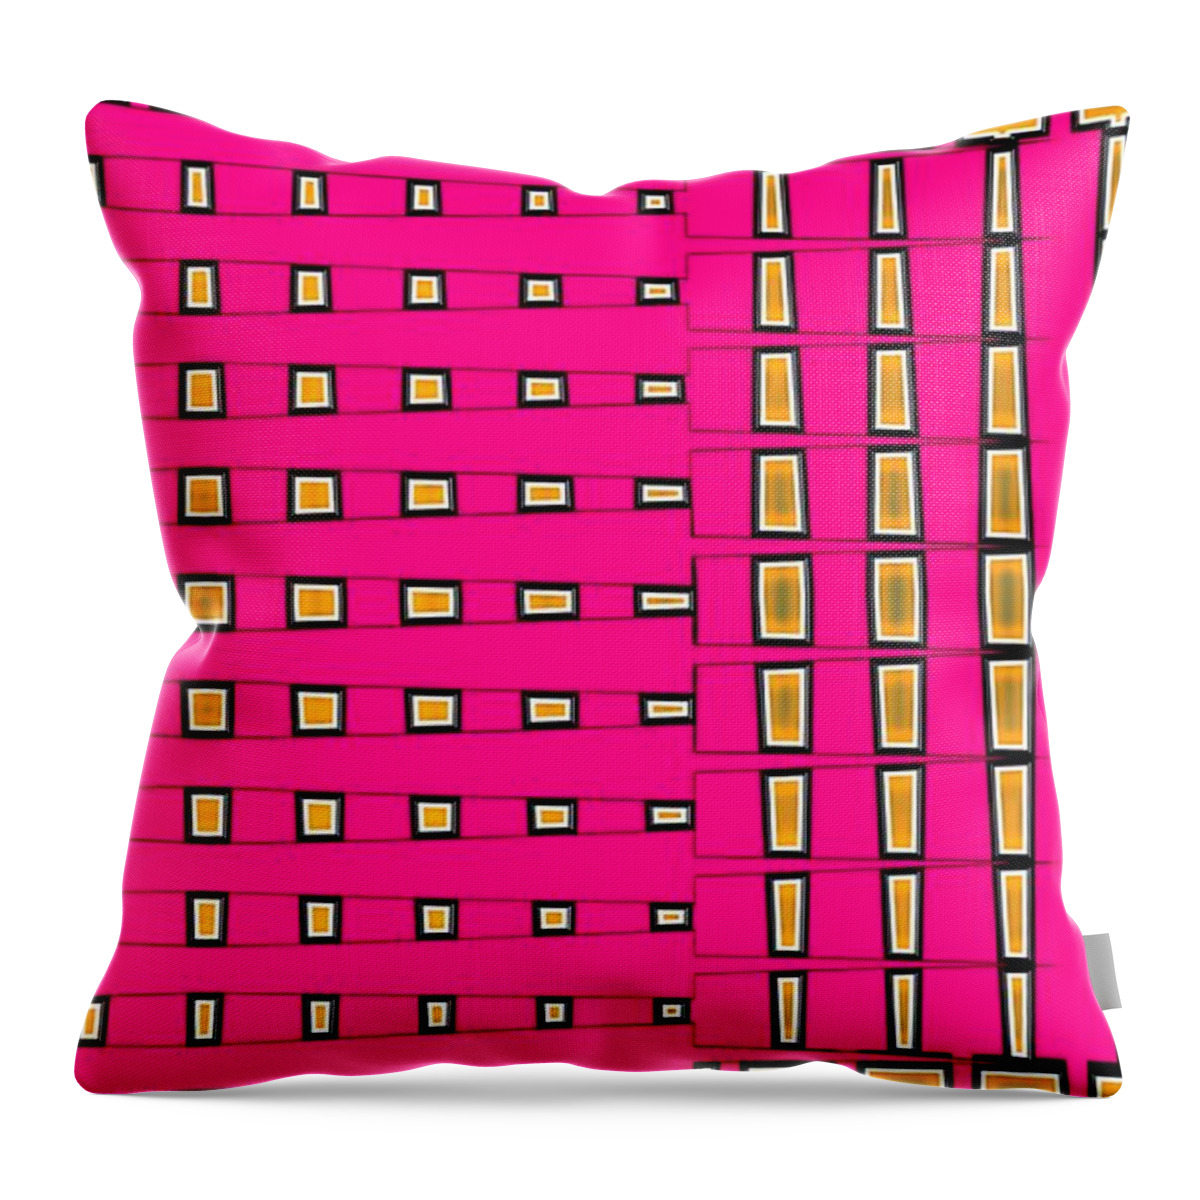 Fashionably Fuschia-s2 Throw Pillow featuring the digital art Fashionably Fuschia-S2 by Darla Wood